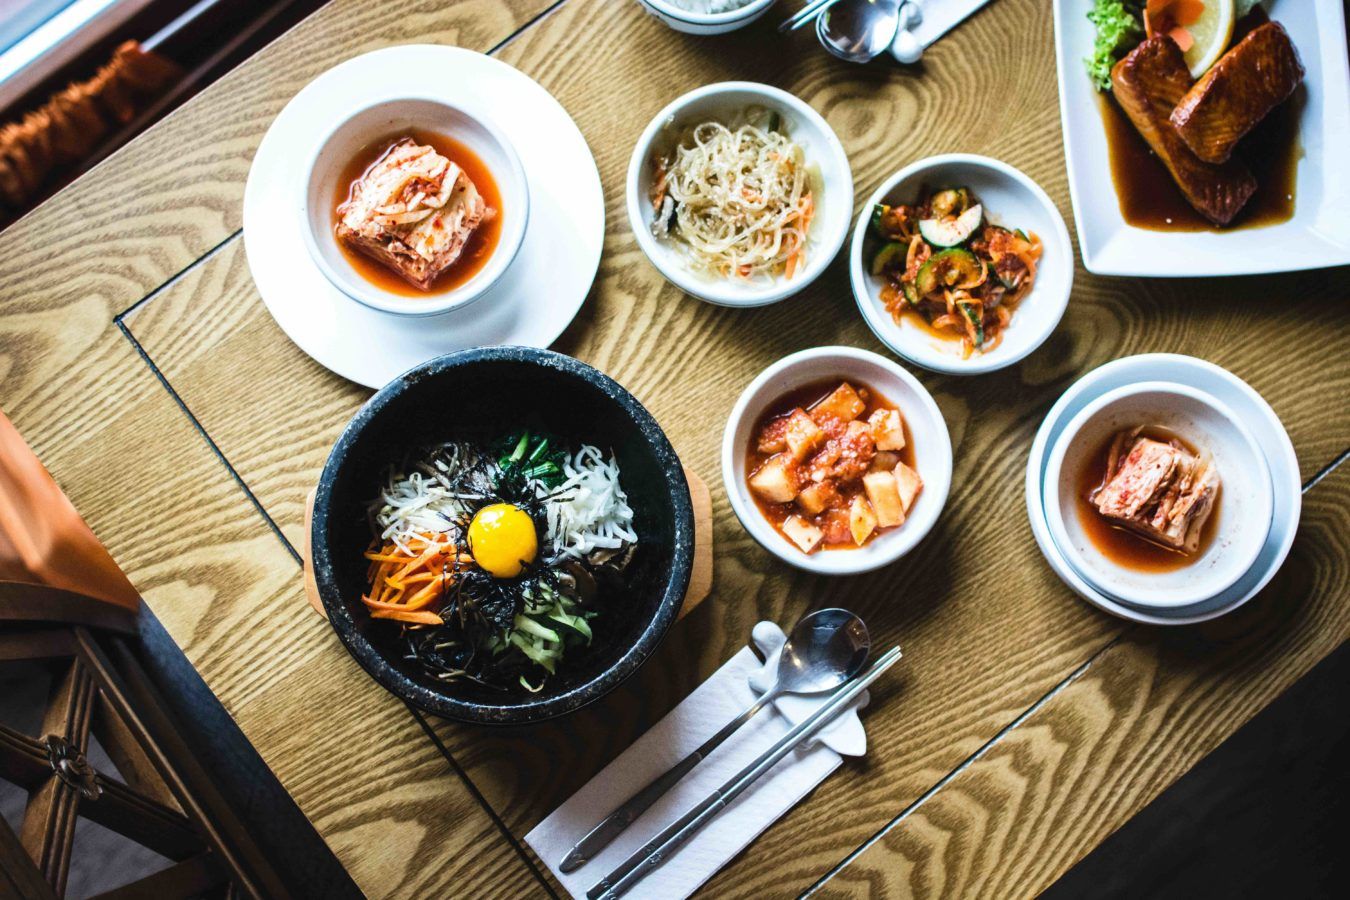 Here are the 5 best Korean restaurants in Singapore